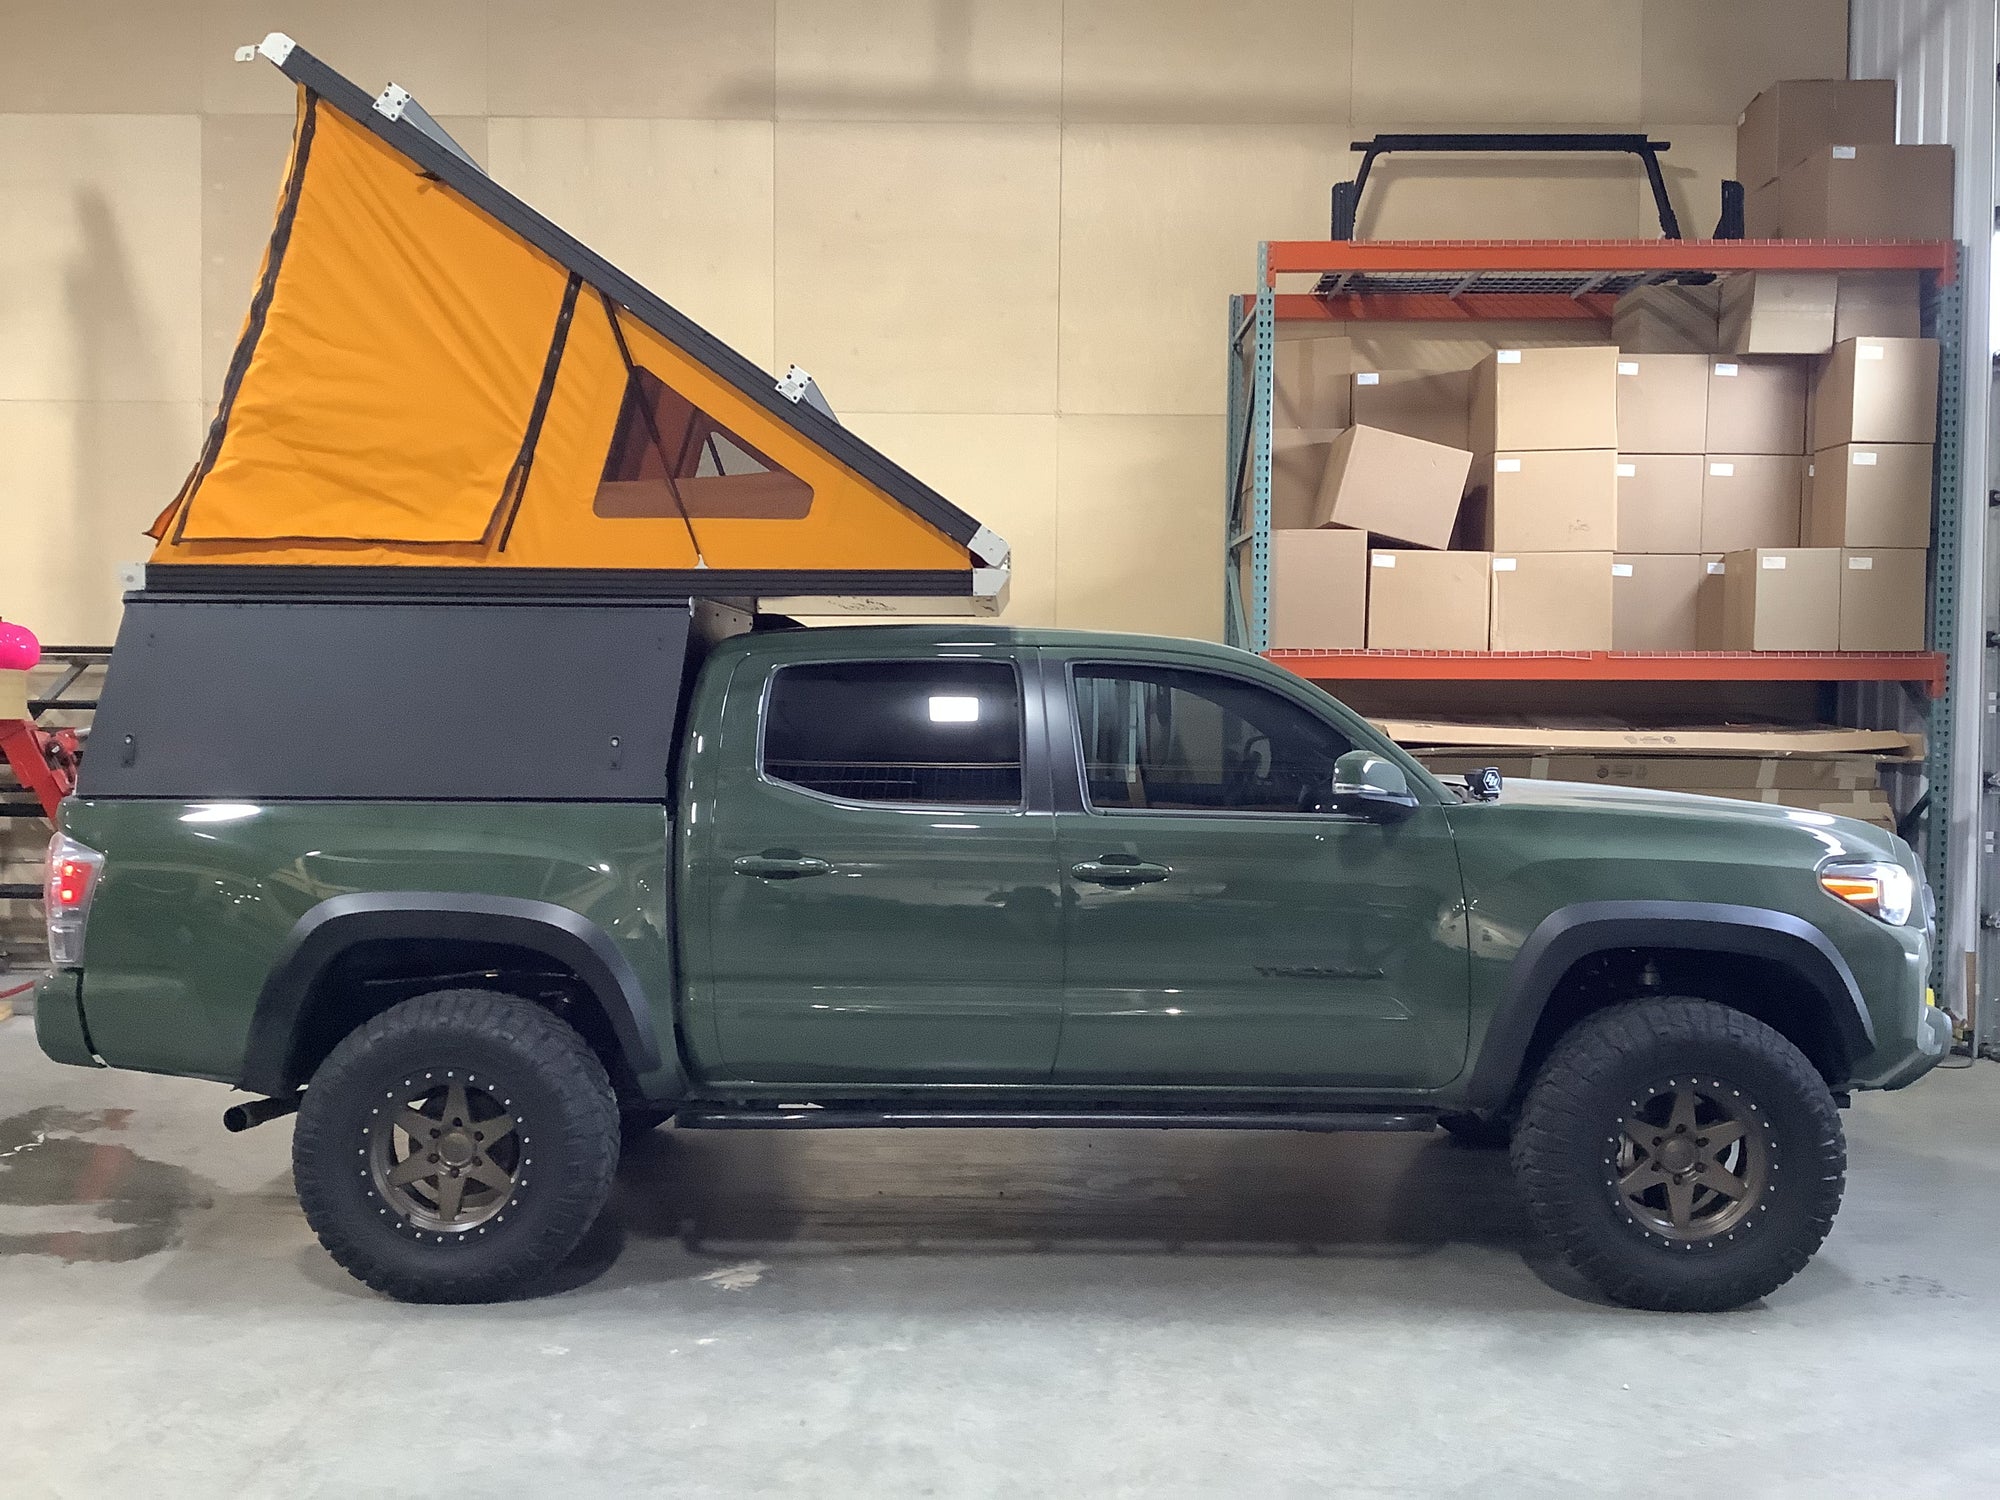 2021 Toyota Tacoma Camper - Build #3592